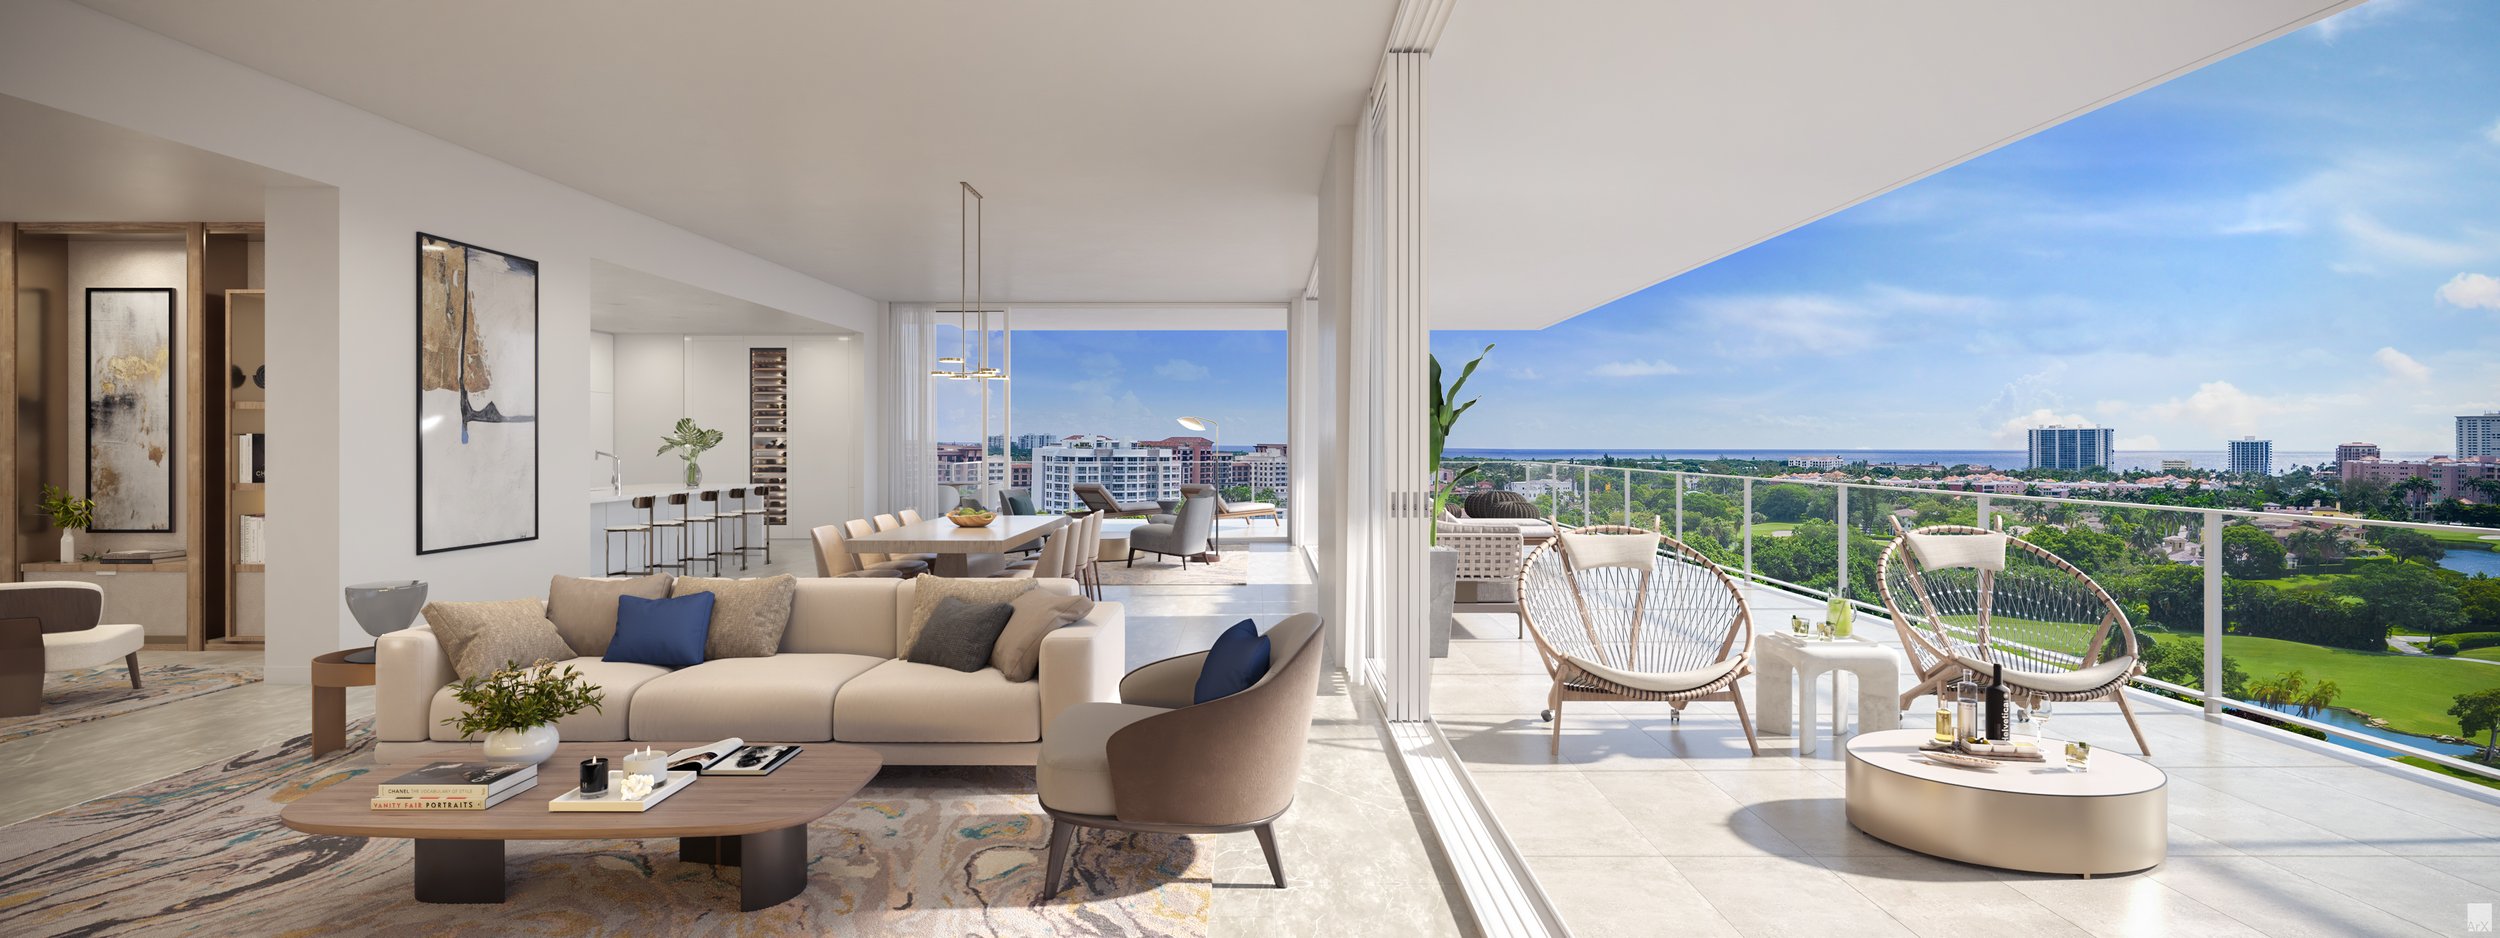 El-Ad National Properties Breaks Ground On ALINA Residences Phase Two In Boca Raton9.jpg